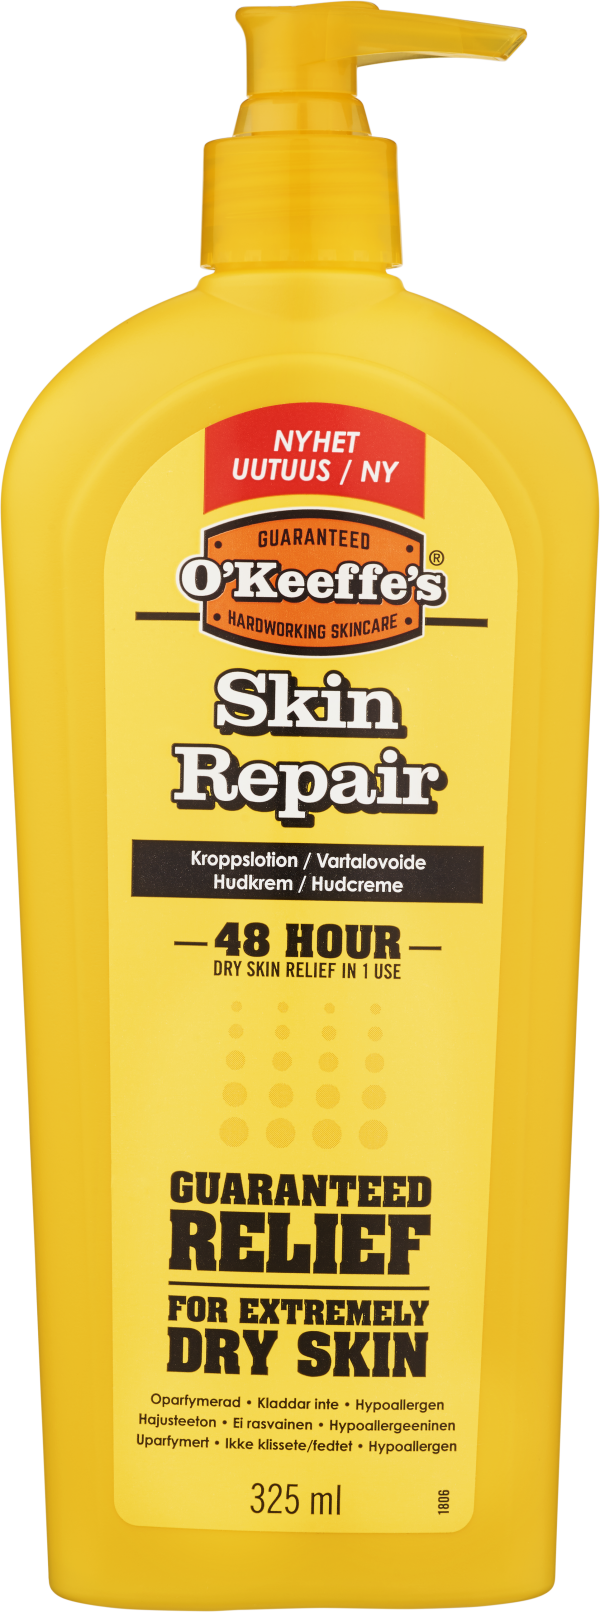 O'Keeffe's Skin Repair hudlotion pumpflaska 325 ml